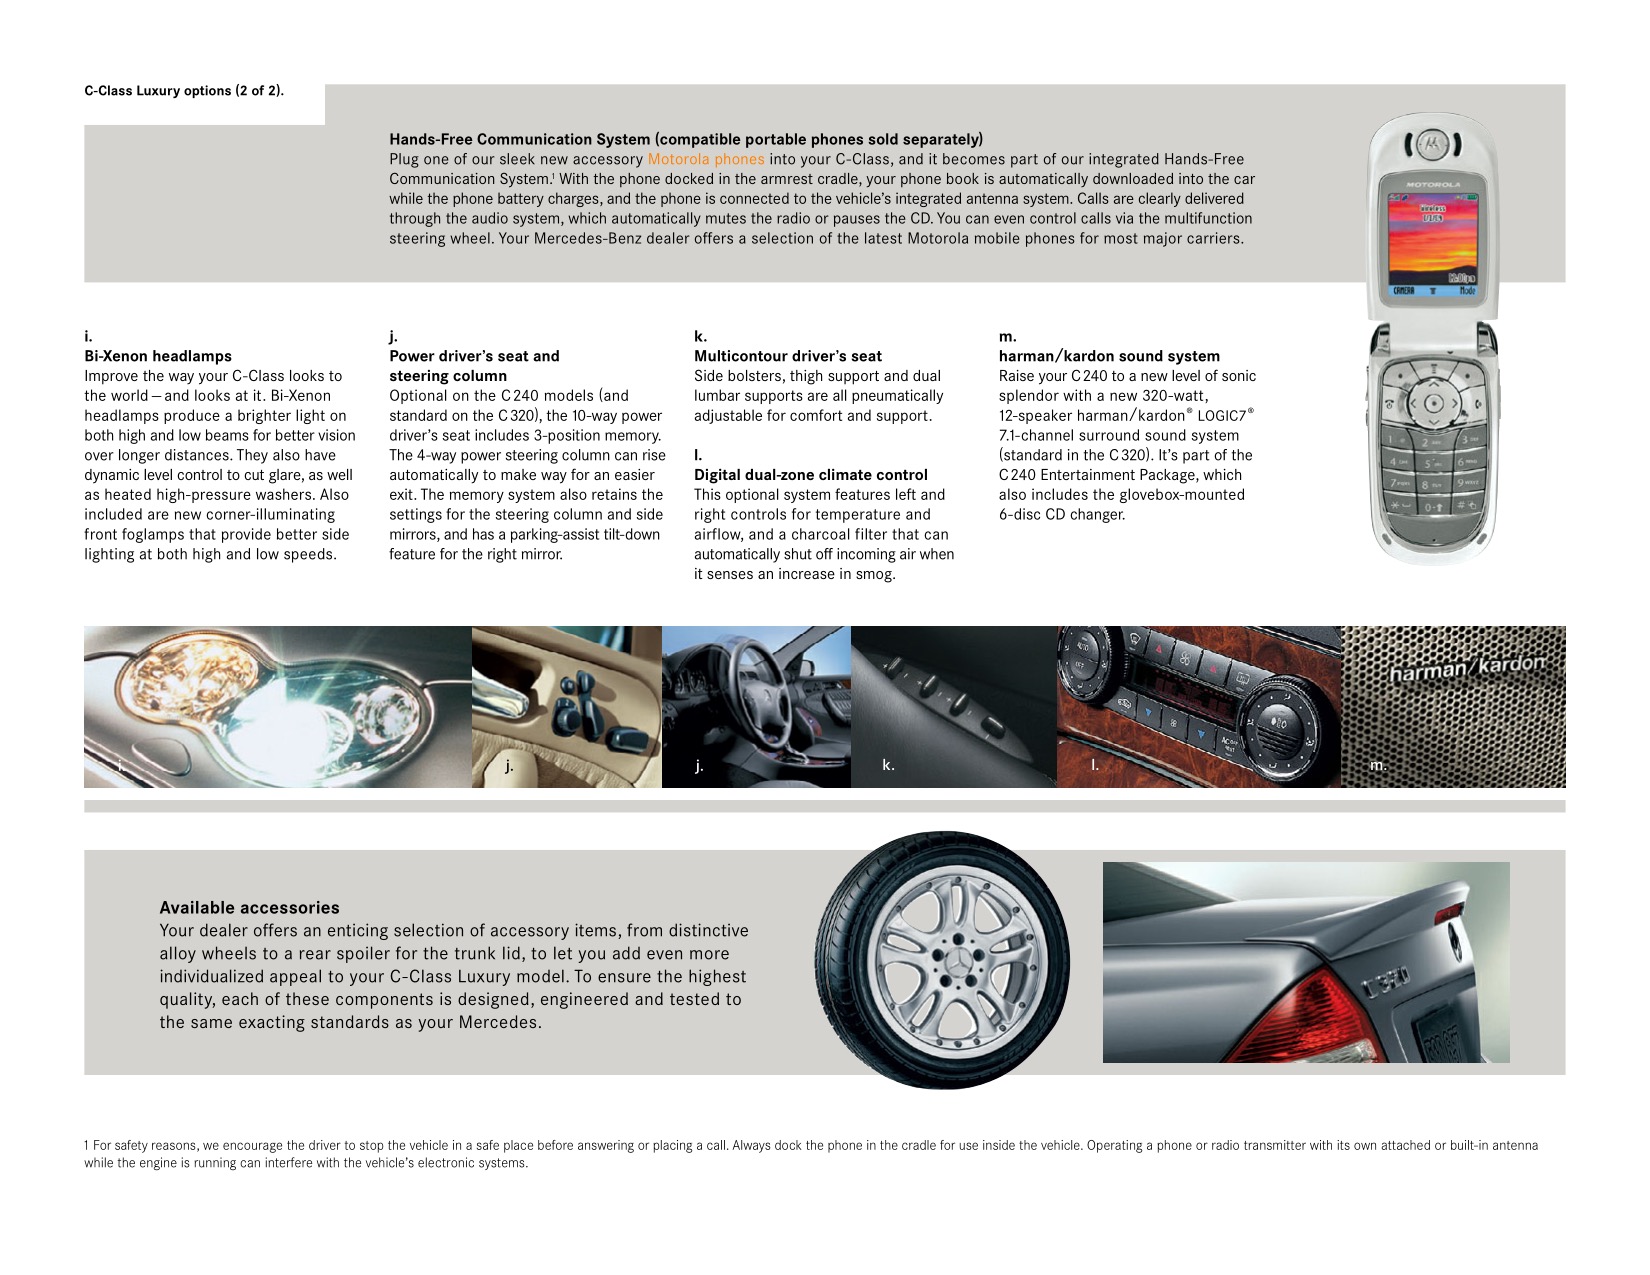 2005 Mercedes-Benz C-Class Luxury Brochure Page 21